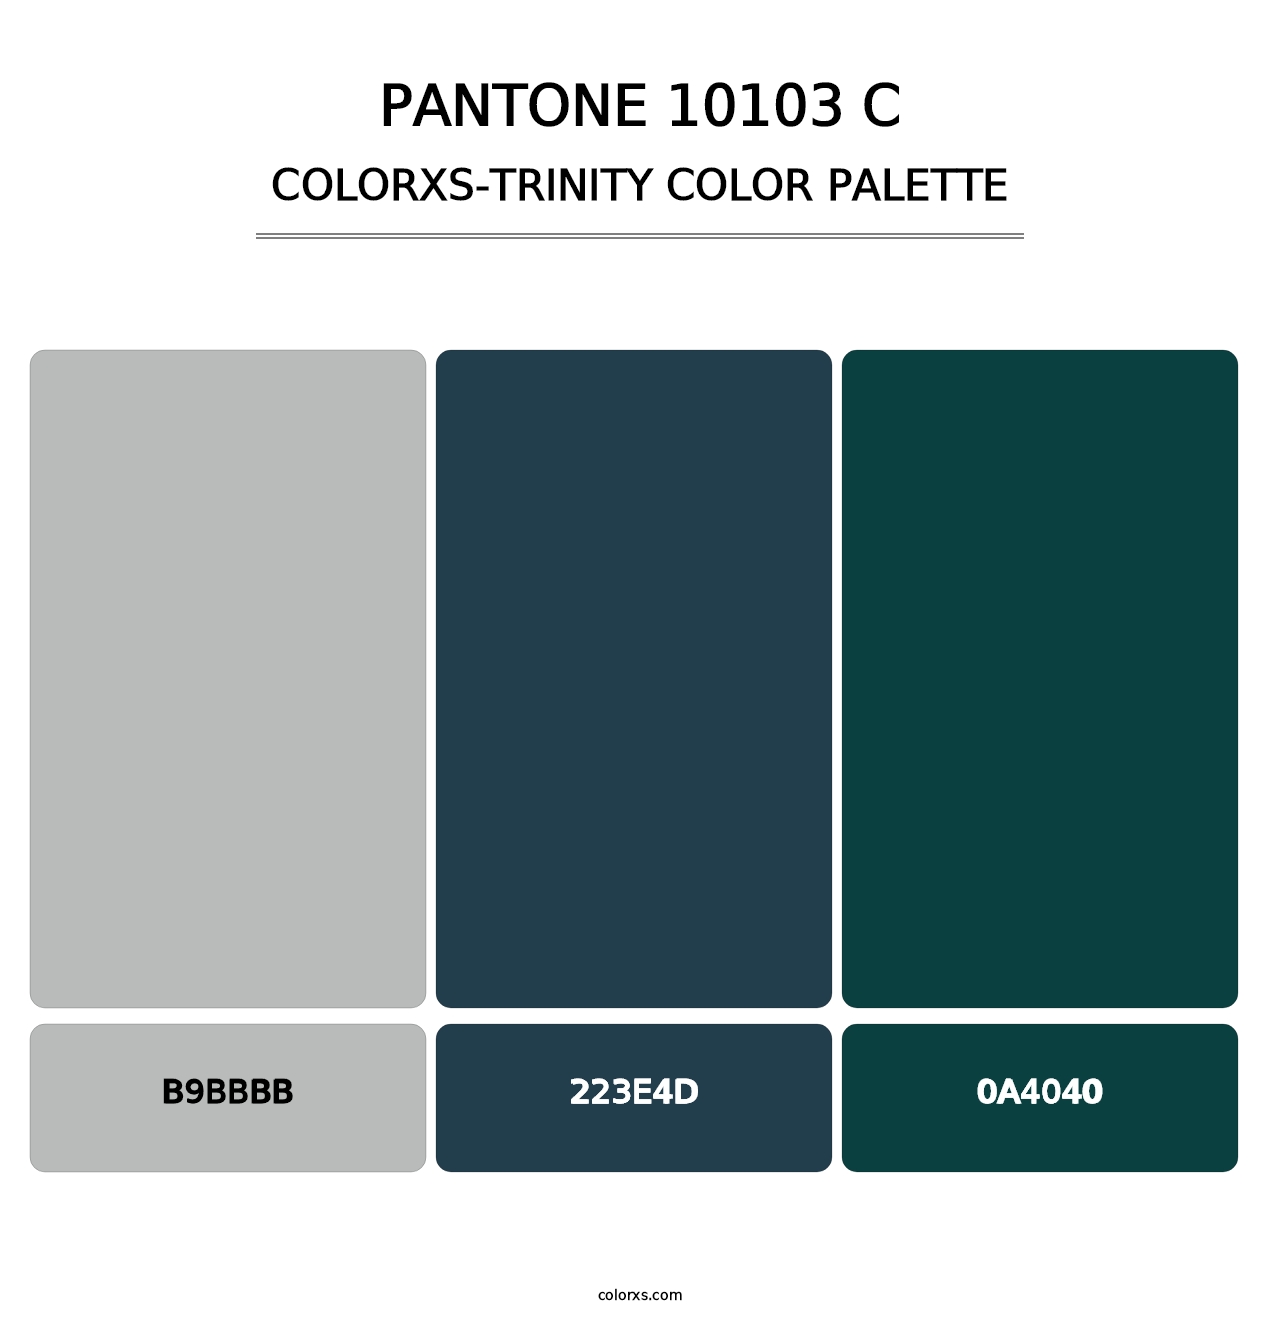 PANTONE 10103 C - Colorxs Trinity Palette